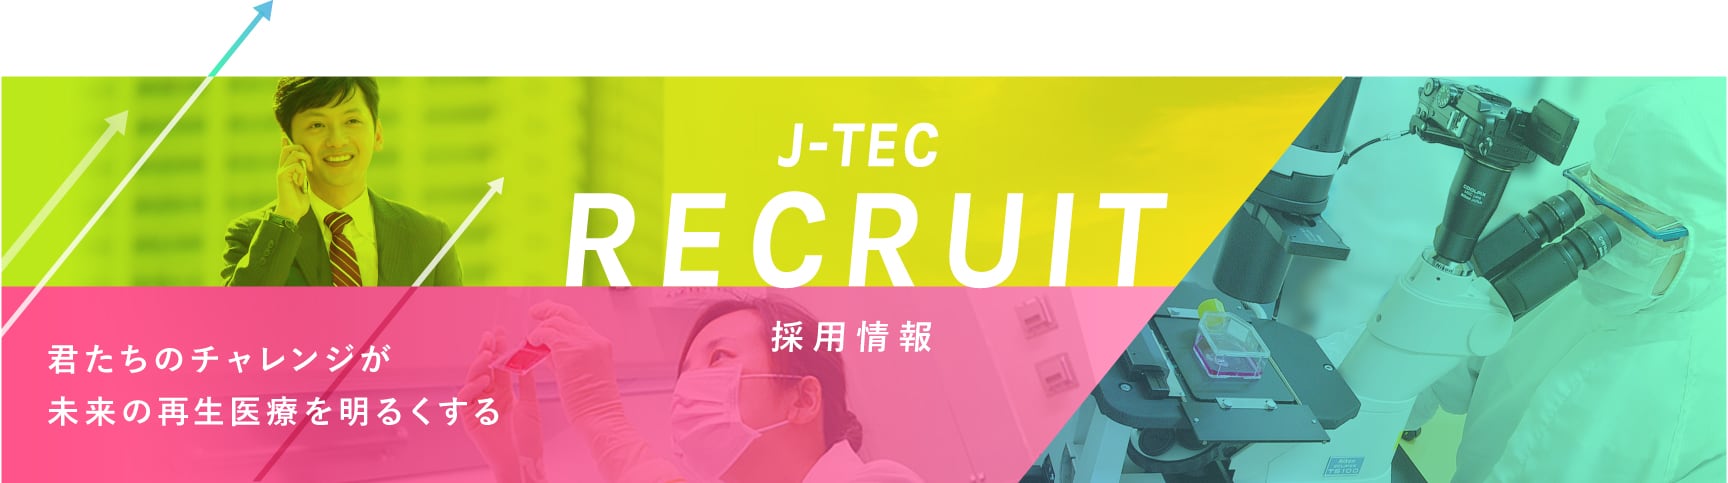 J-TEC RECRUIT 採用情報